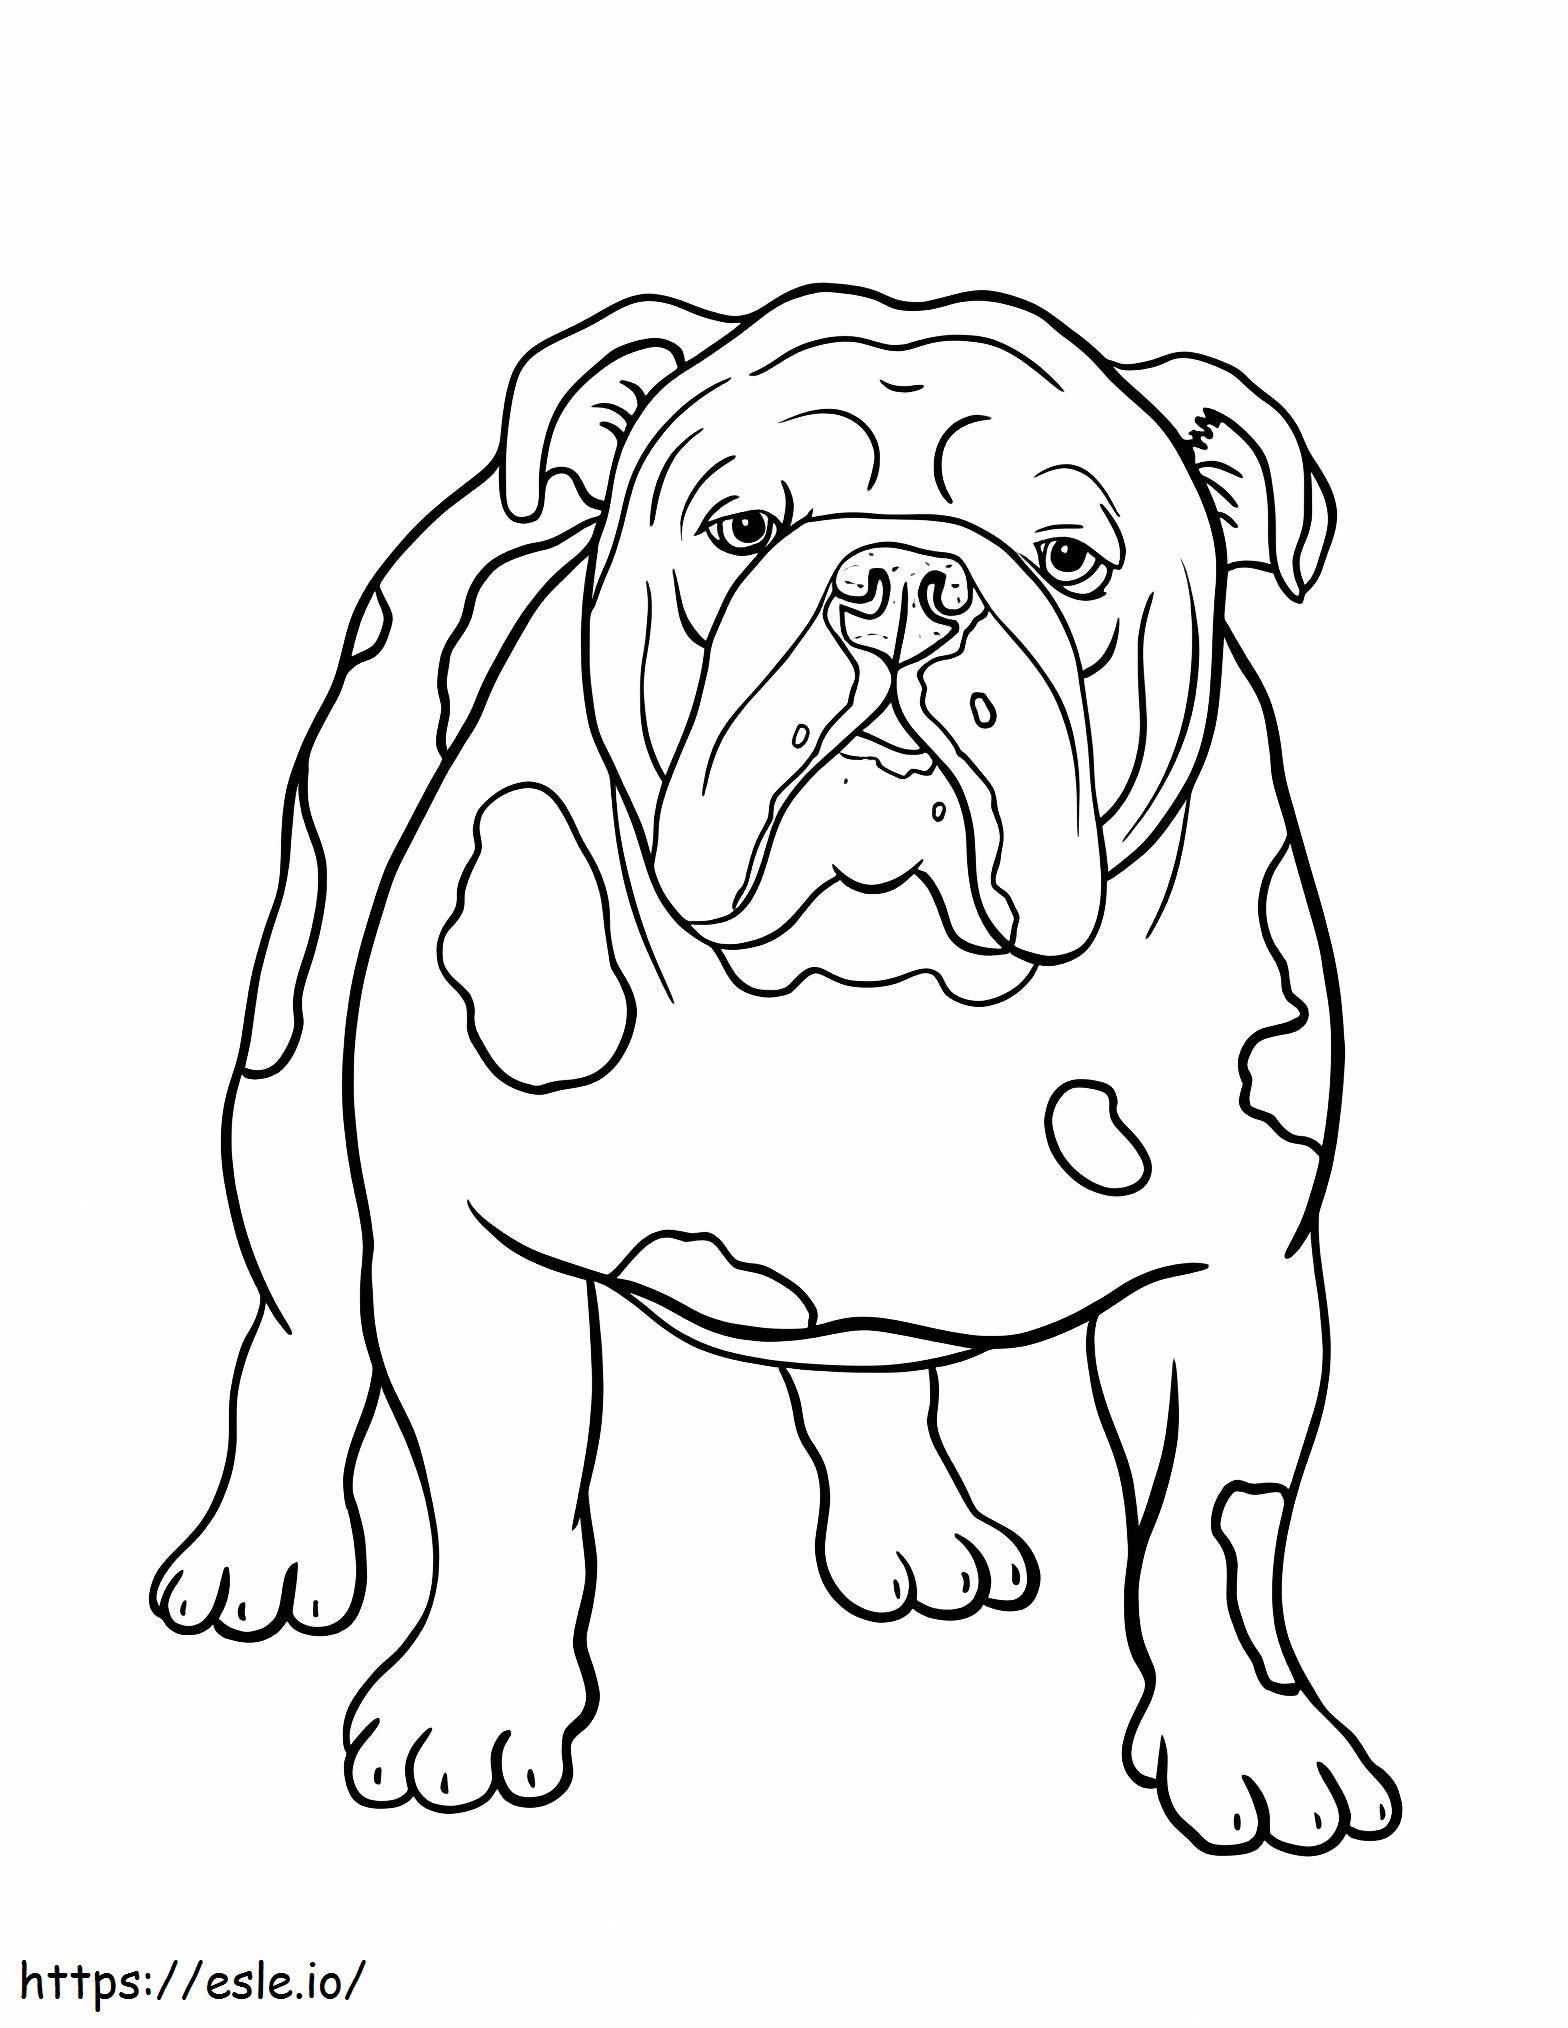 Einfache Bulldogge ausmalbilder